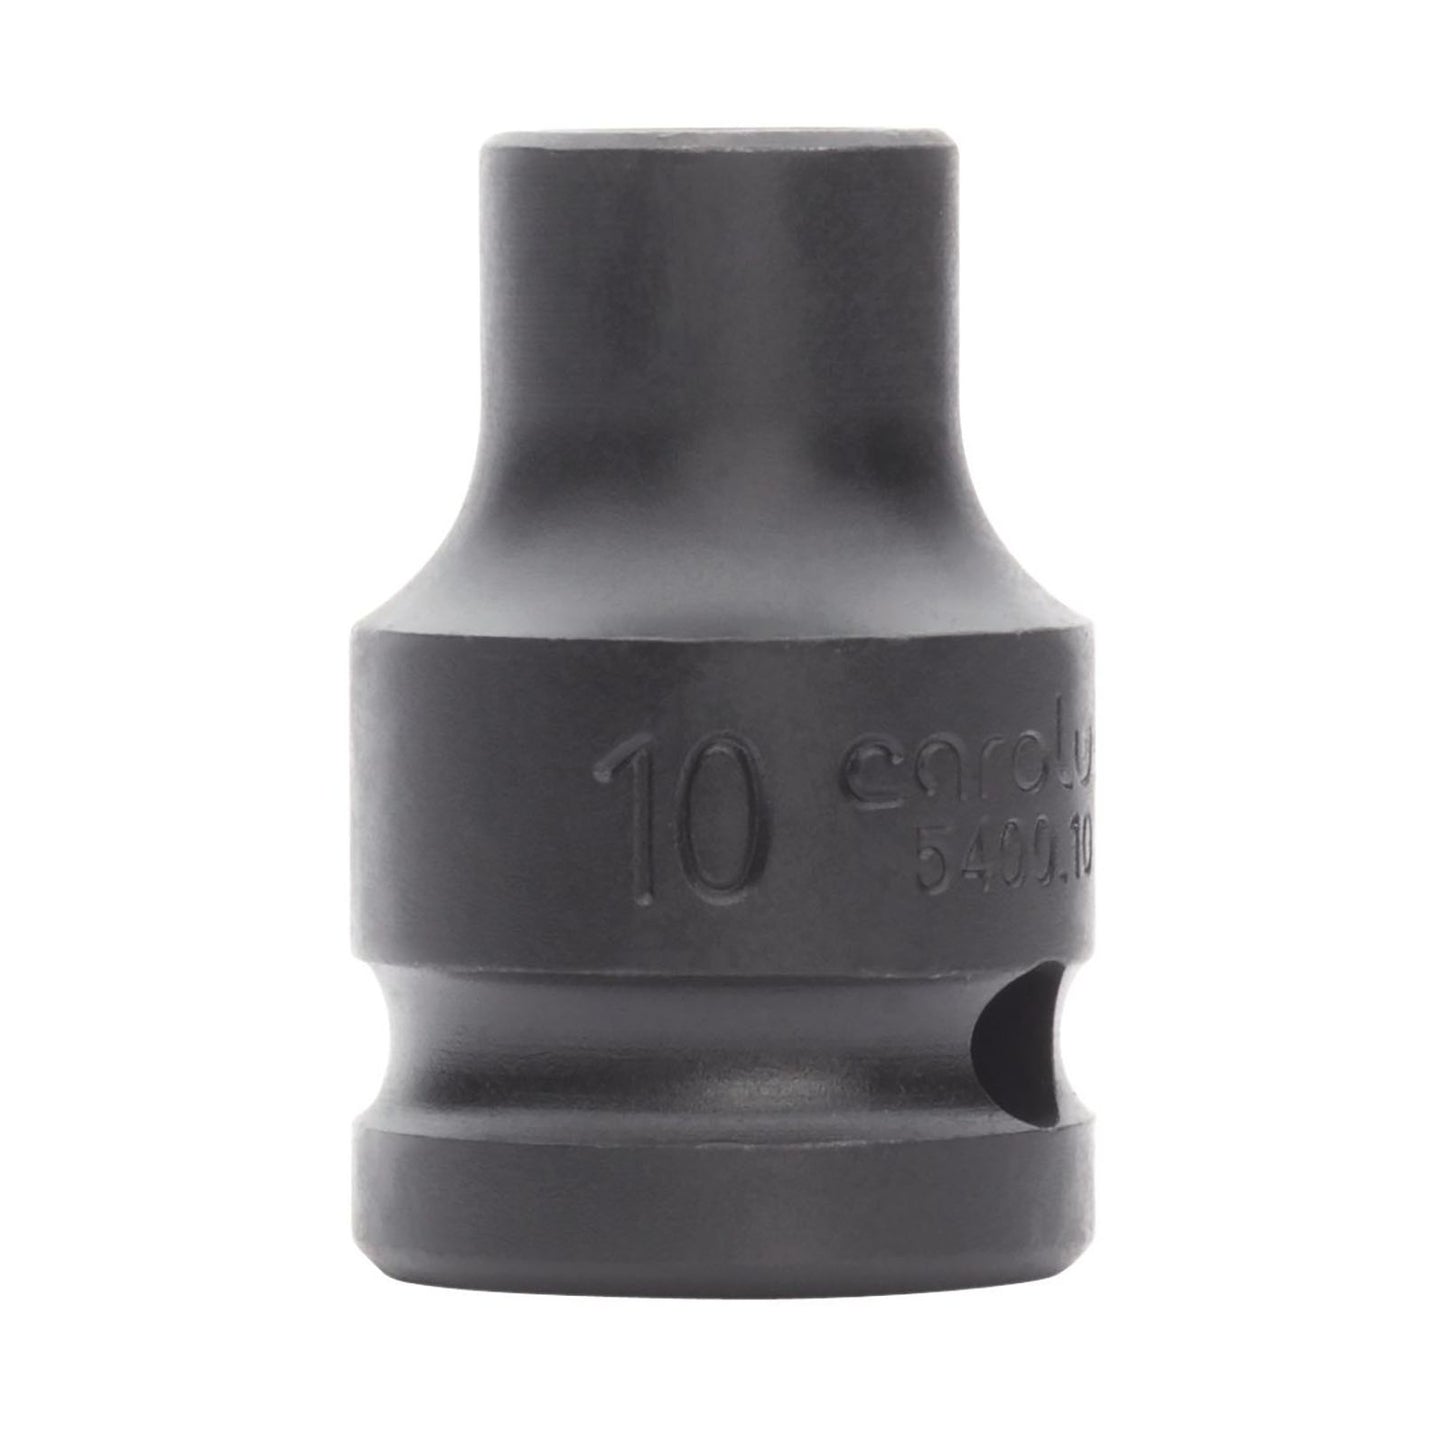 GEDORE K 20 14 - Douille à chocs hexagonale 1/4", 14 mm (6199060)